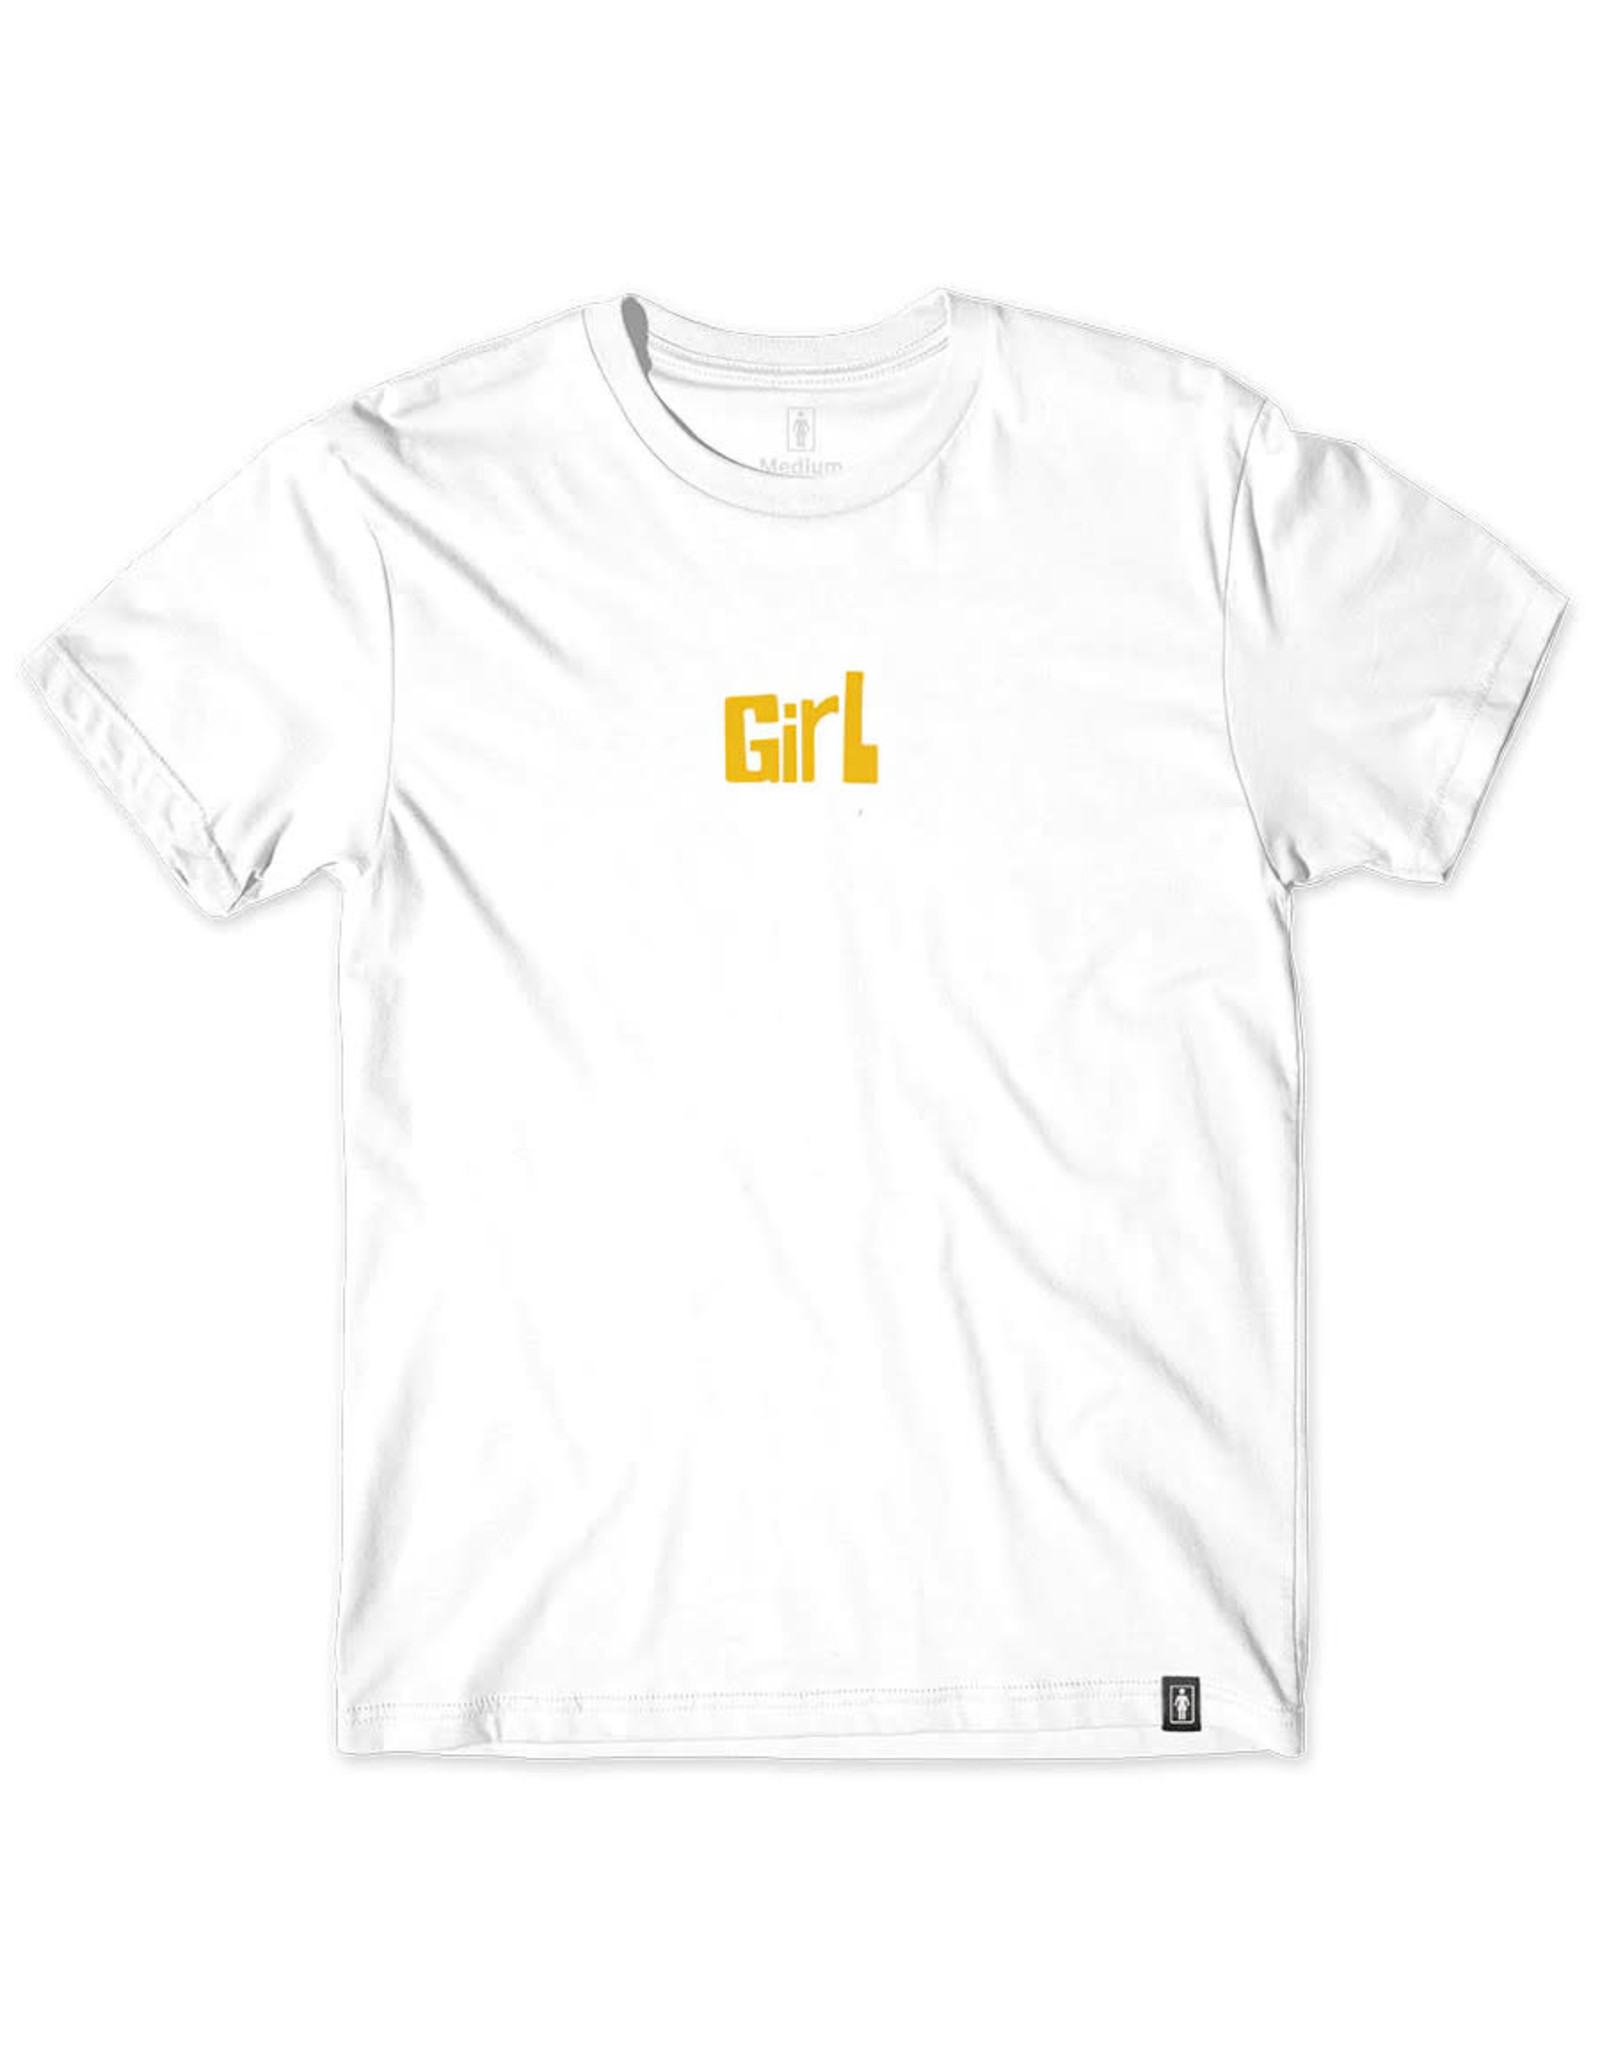 Girl Girl Tee Pictograph S/S (White)